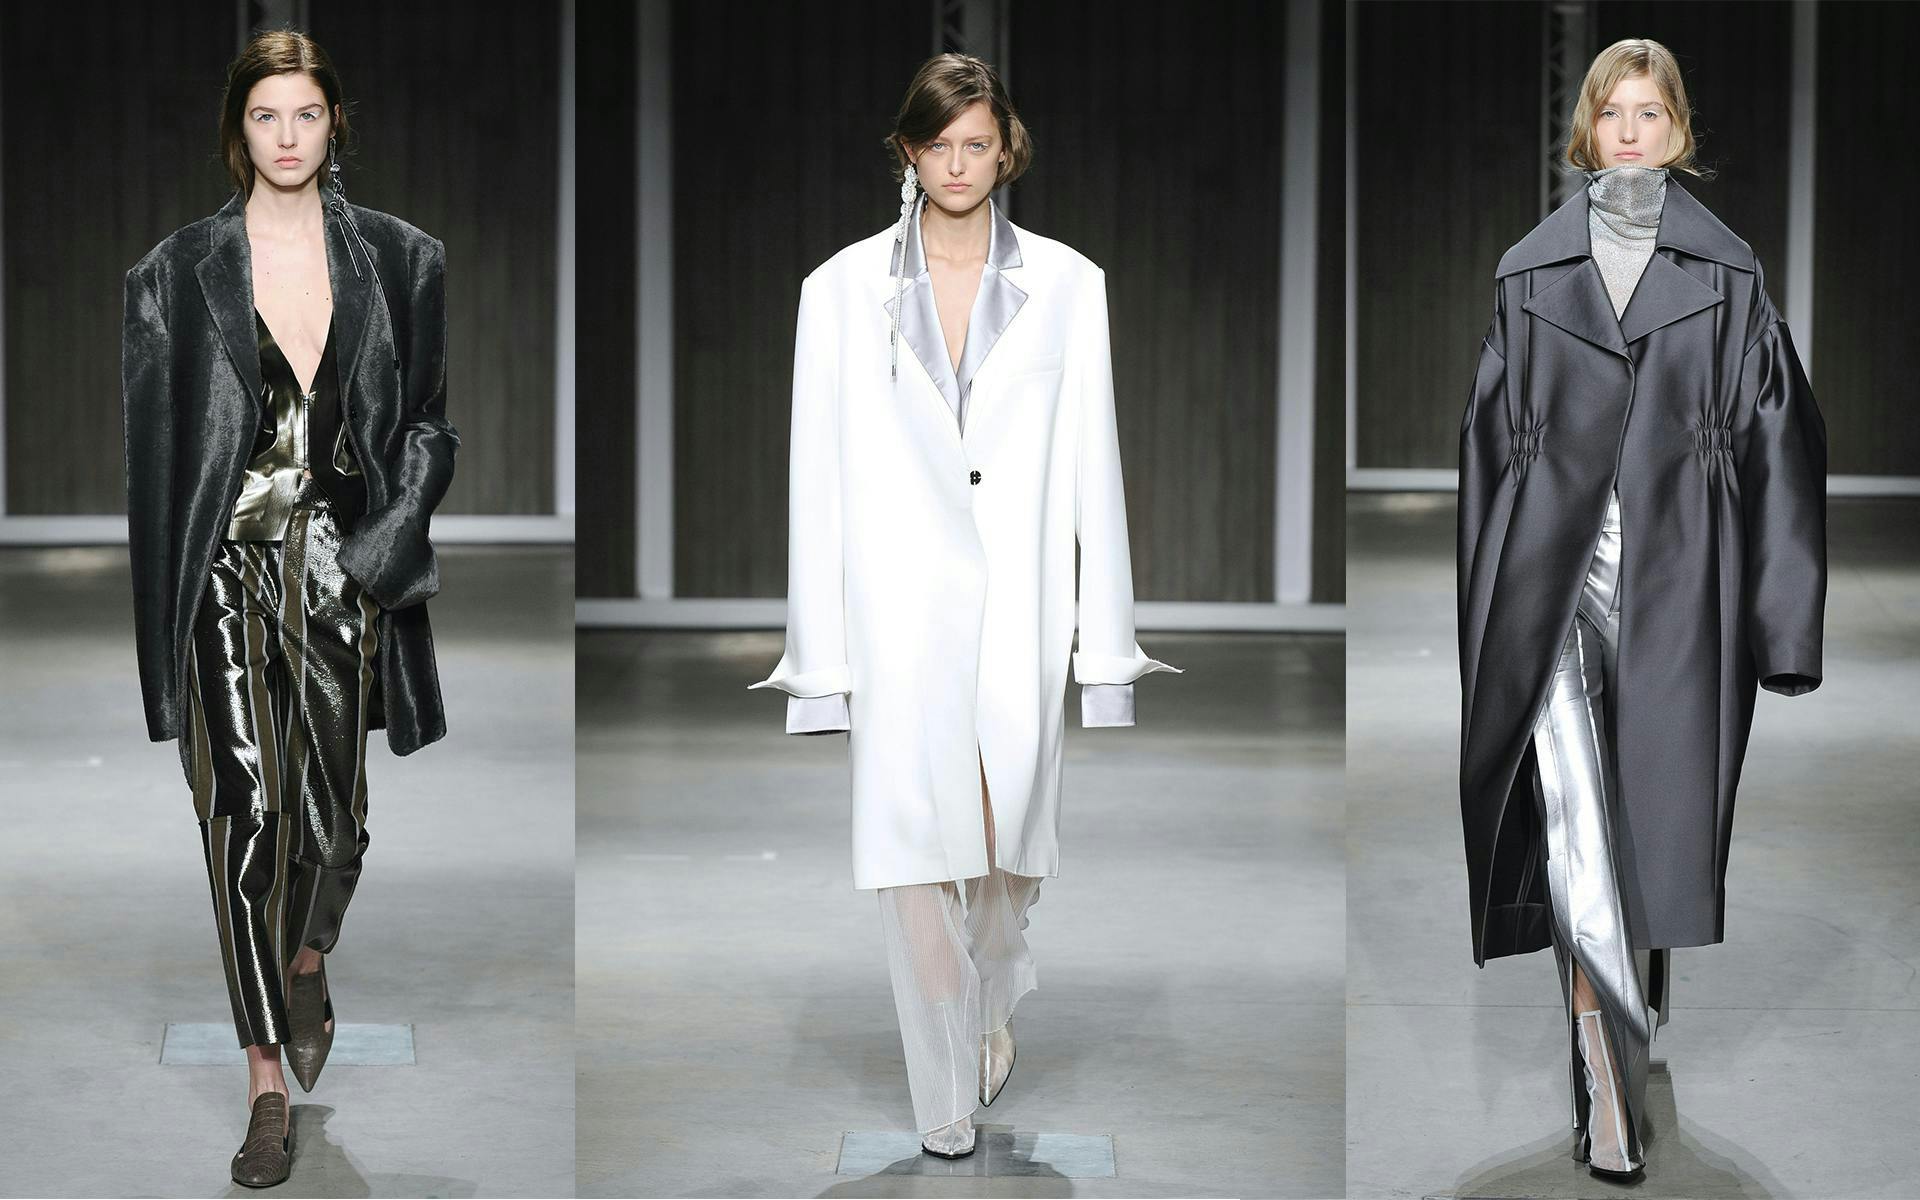 clothing apparel coat sleeve overcoat long sleeve human person runway